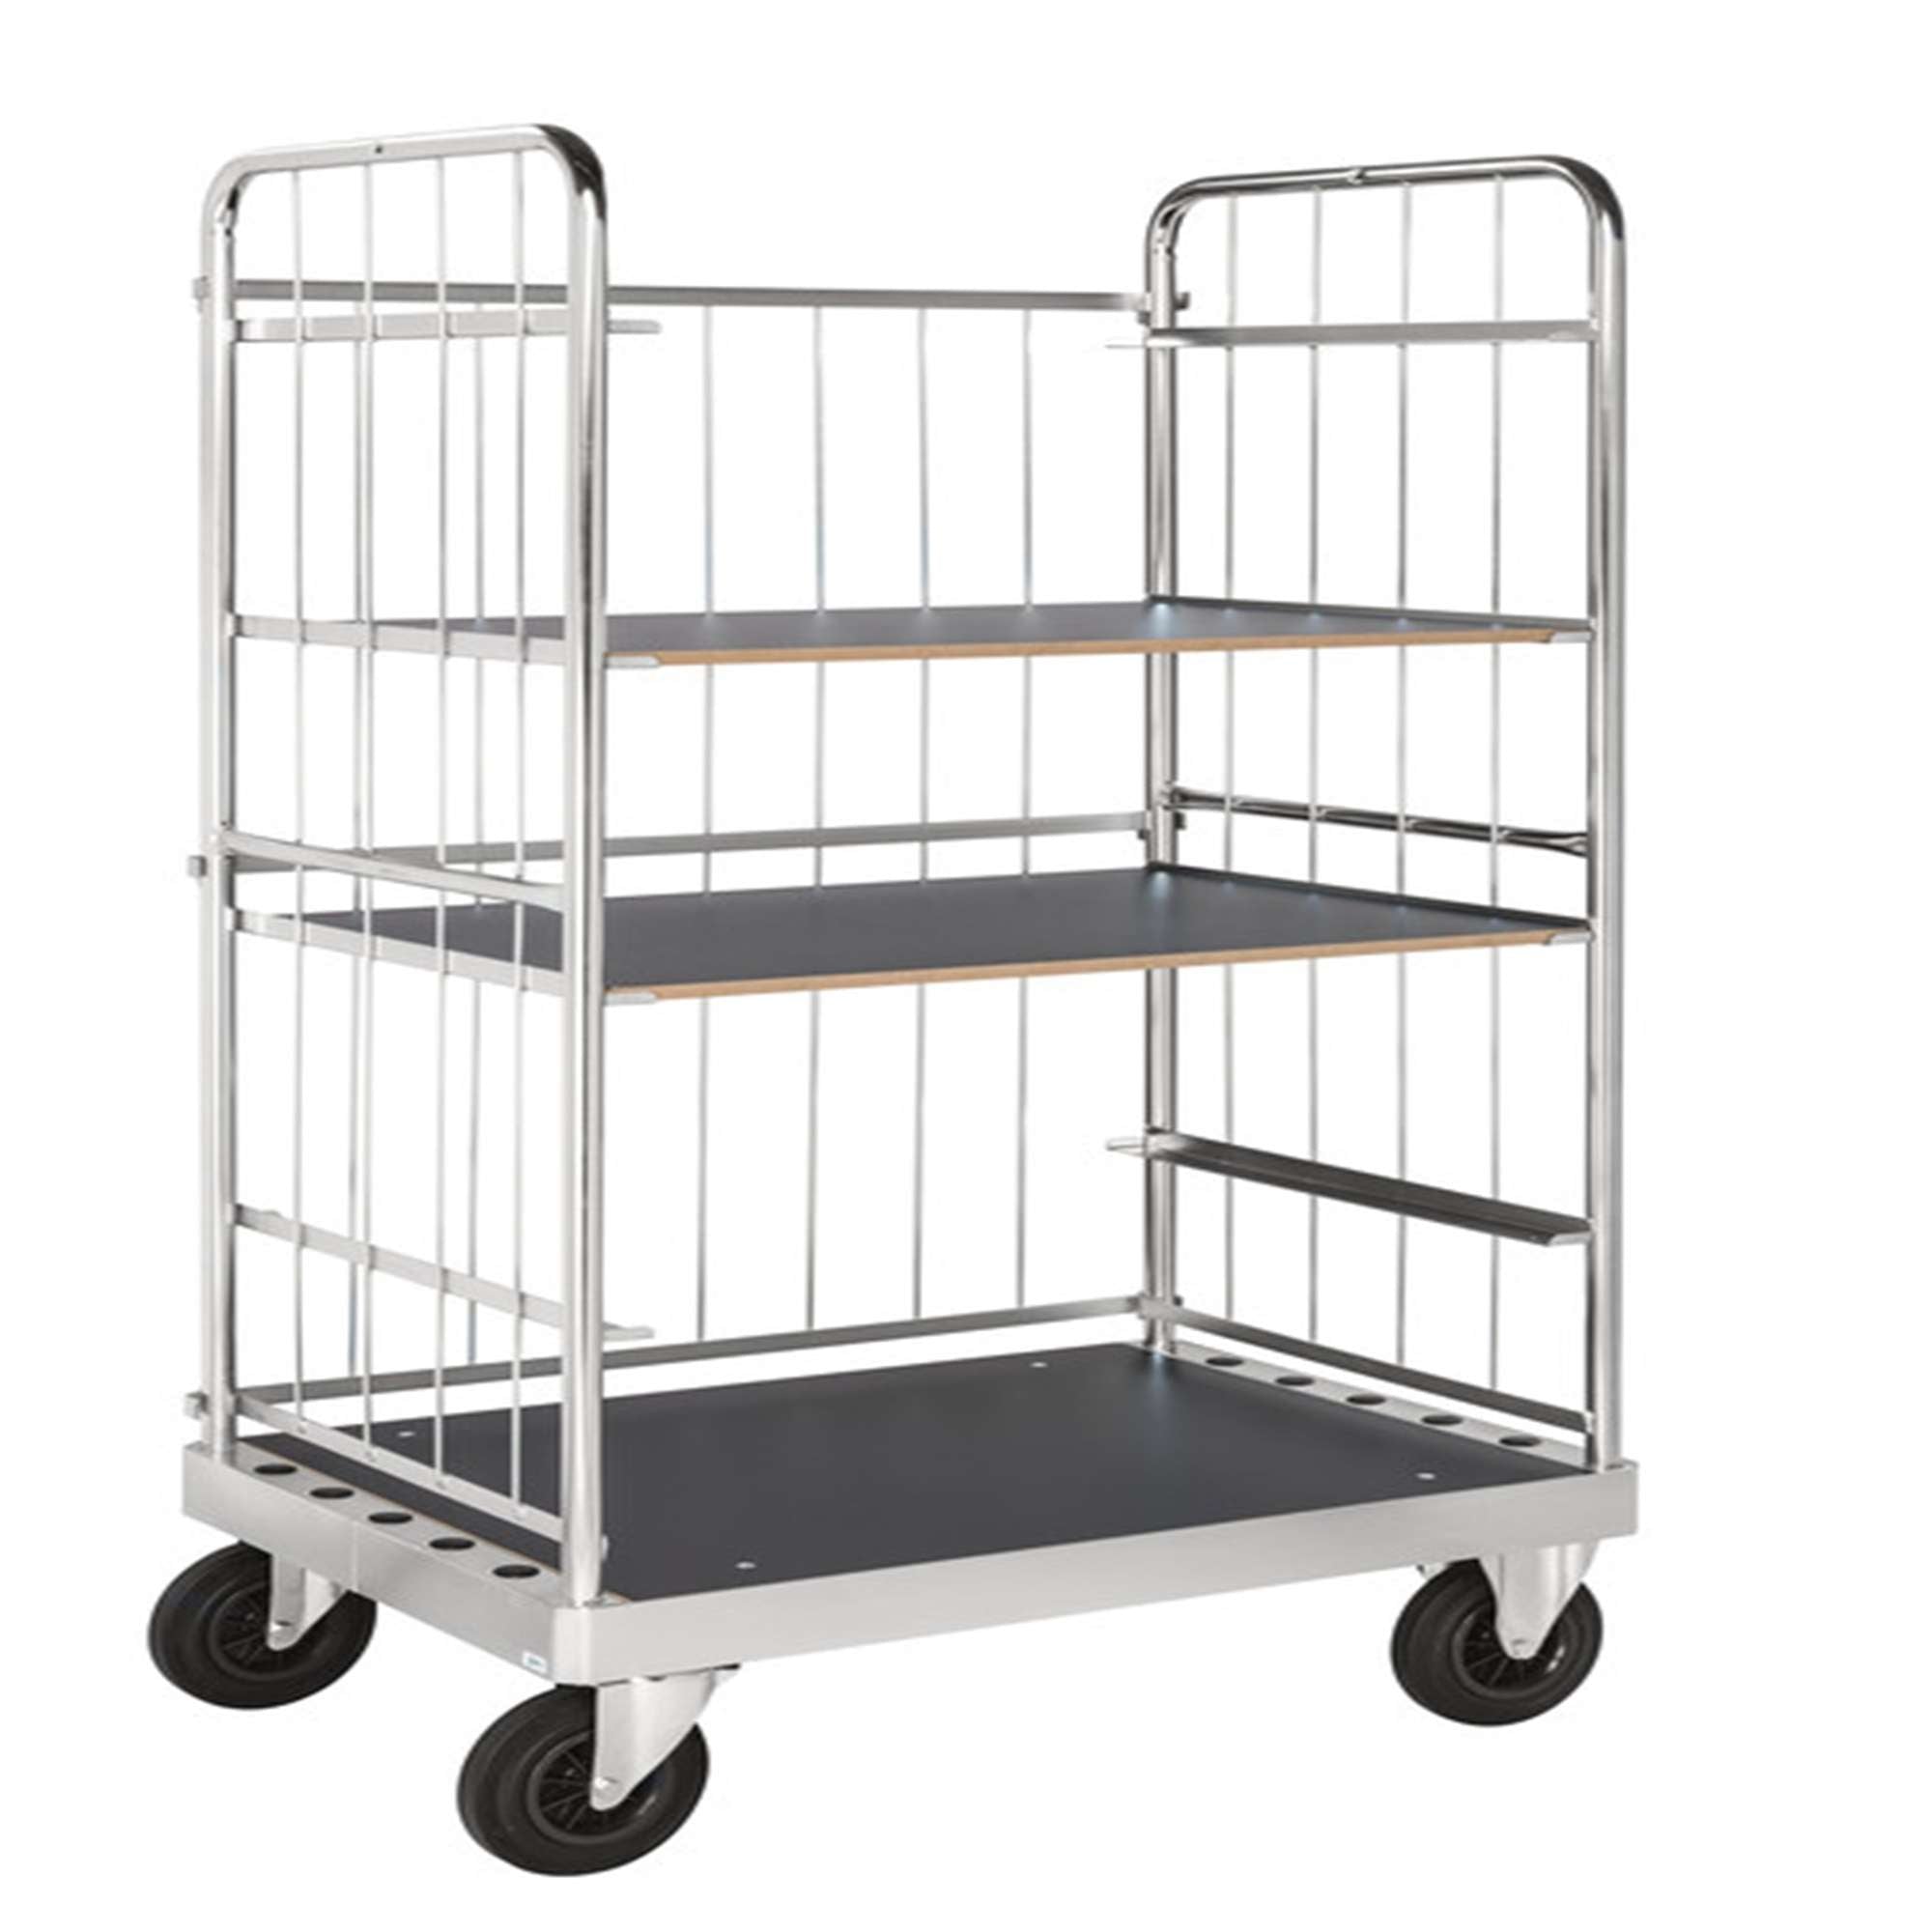 Shelf trolley comes with 2 shelves, L x W x H (mm) 1200 x 800 x 1900